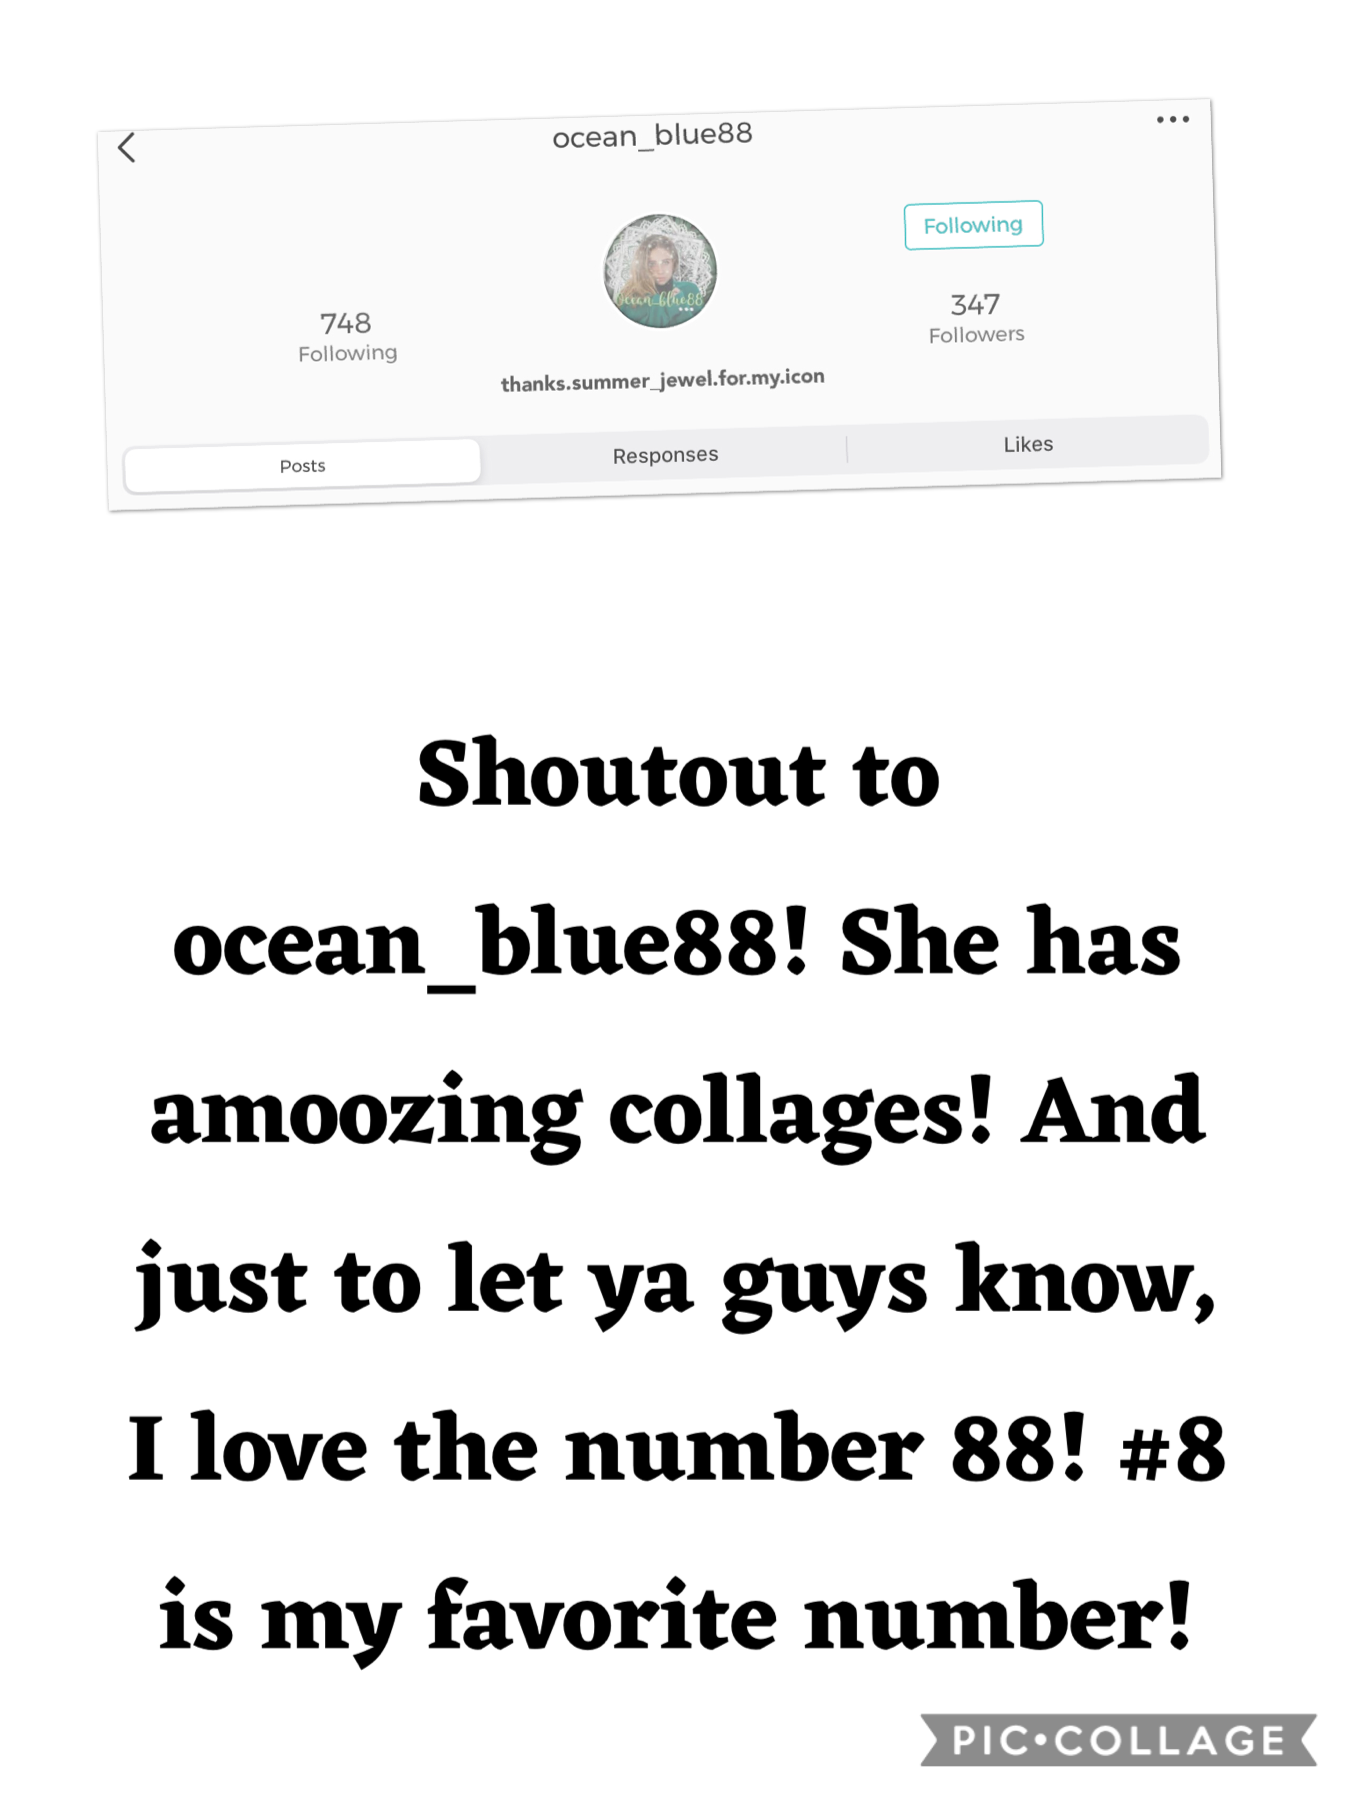 Shoutout to ocean_blue88!